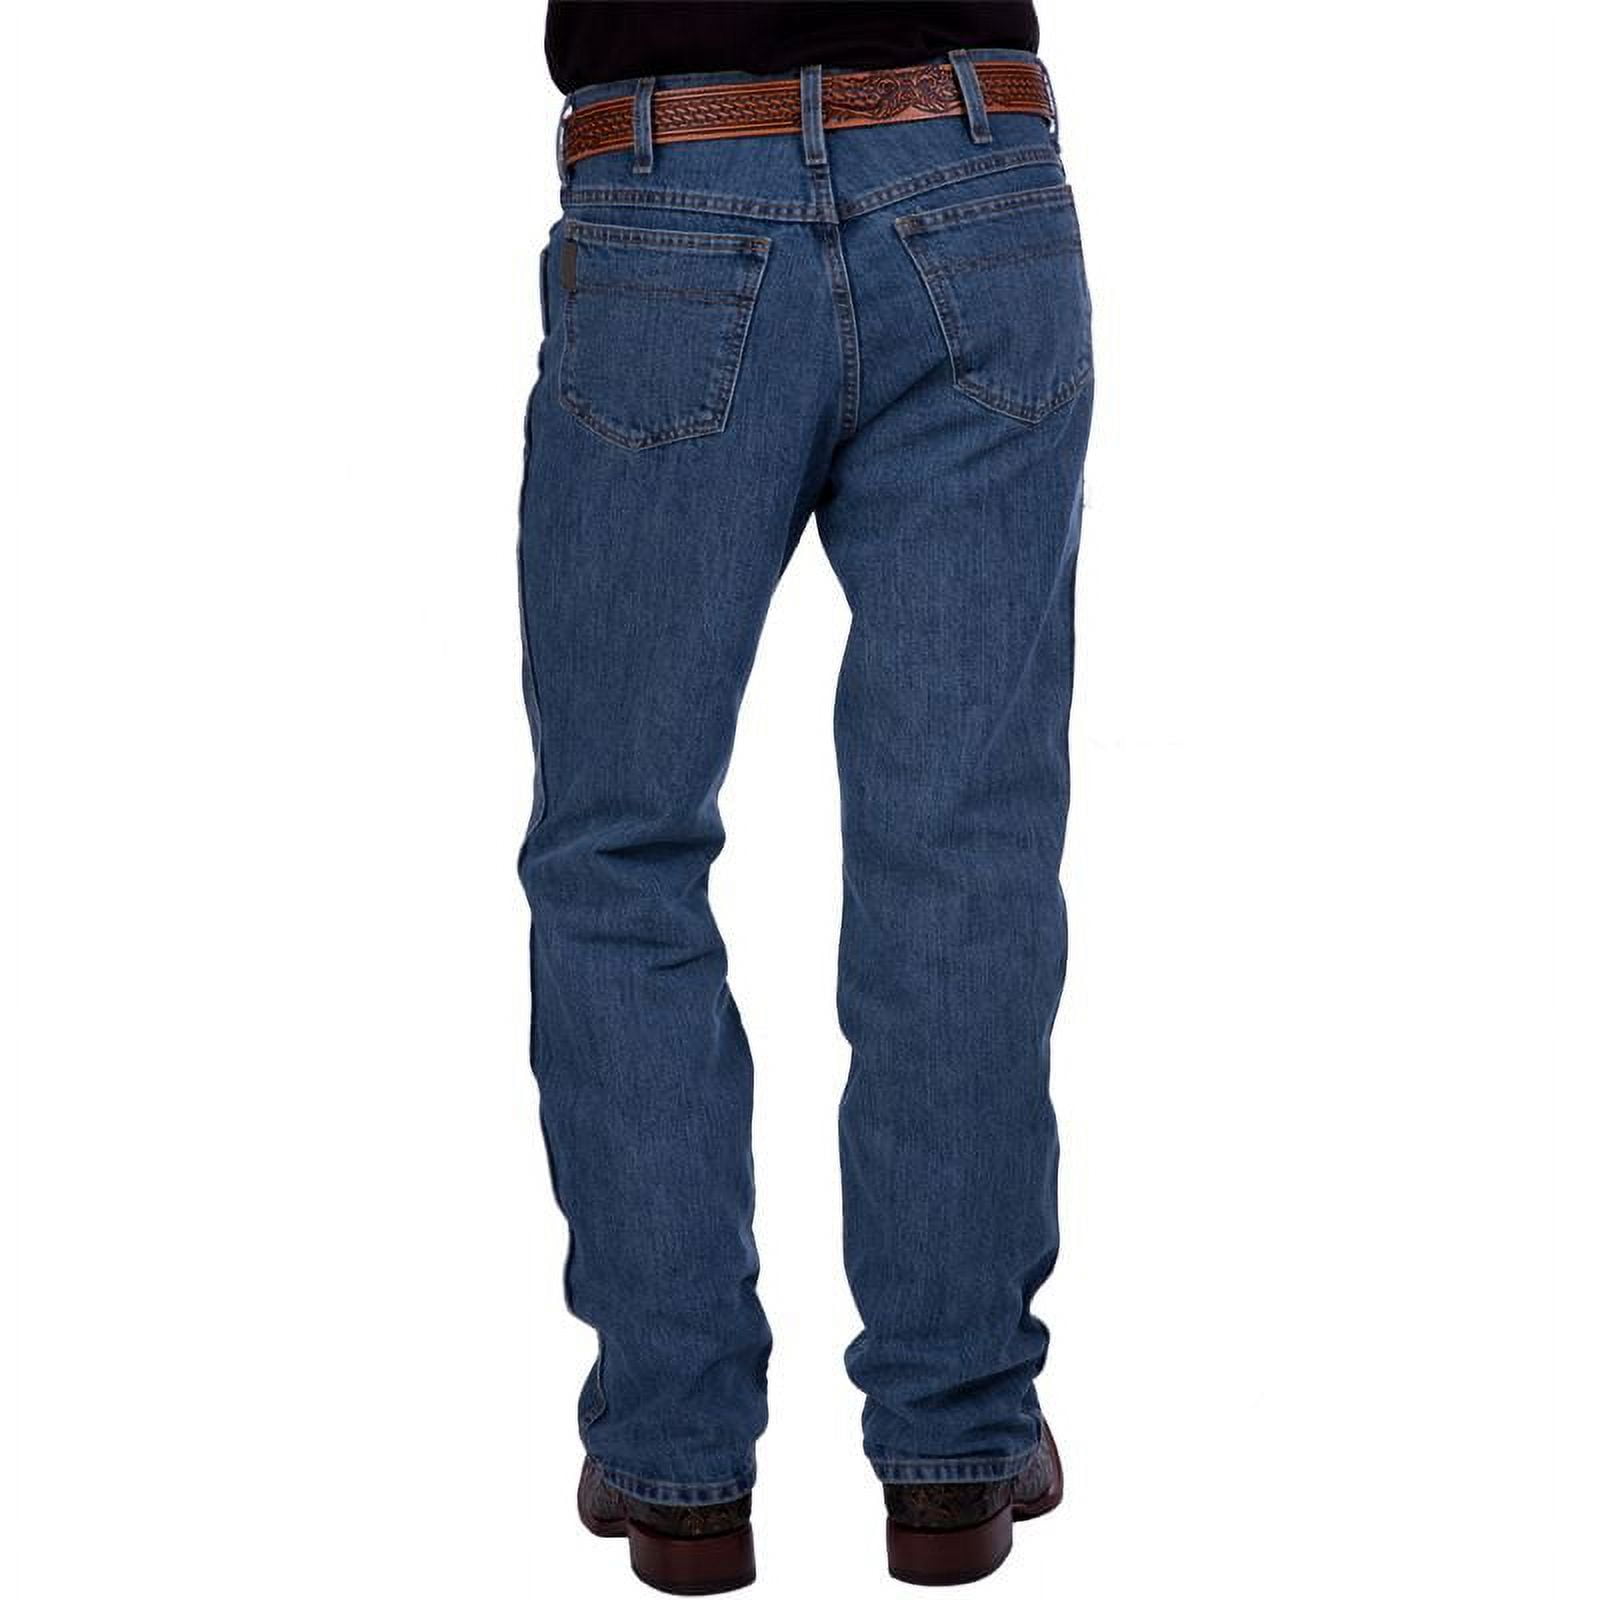 Cinch Bronze Label Jeans Medium Stonewash Blue 32x32 - Walmart.com